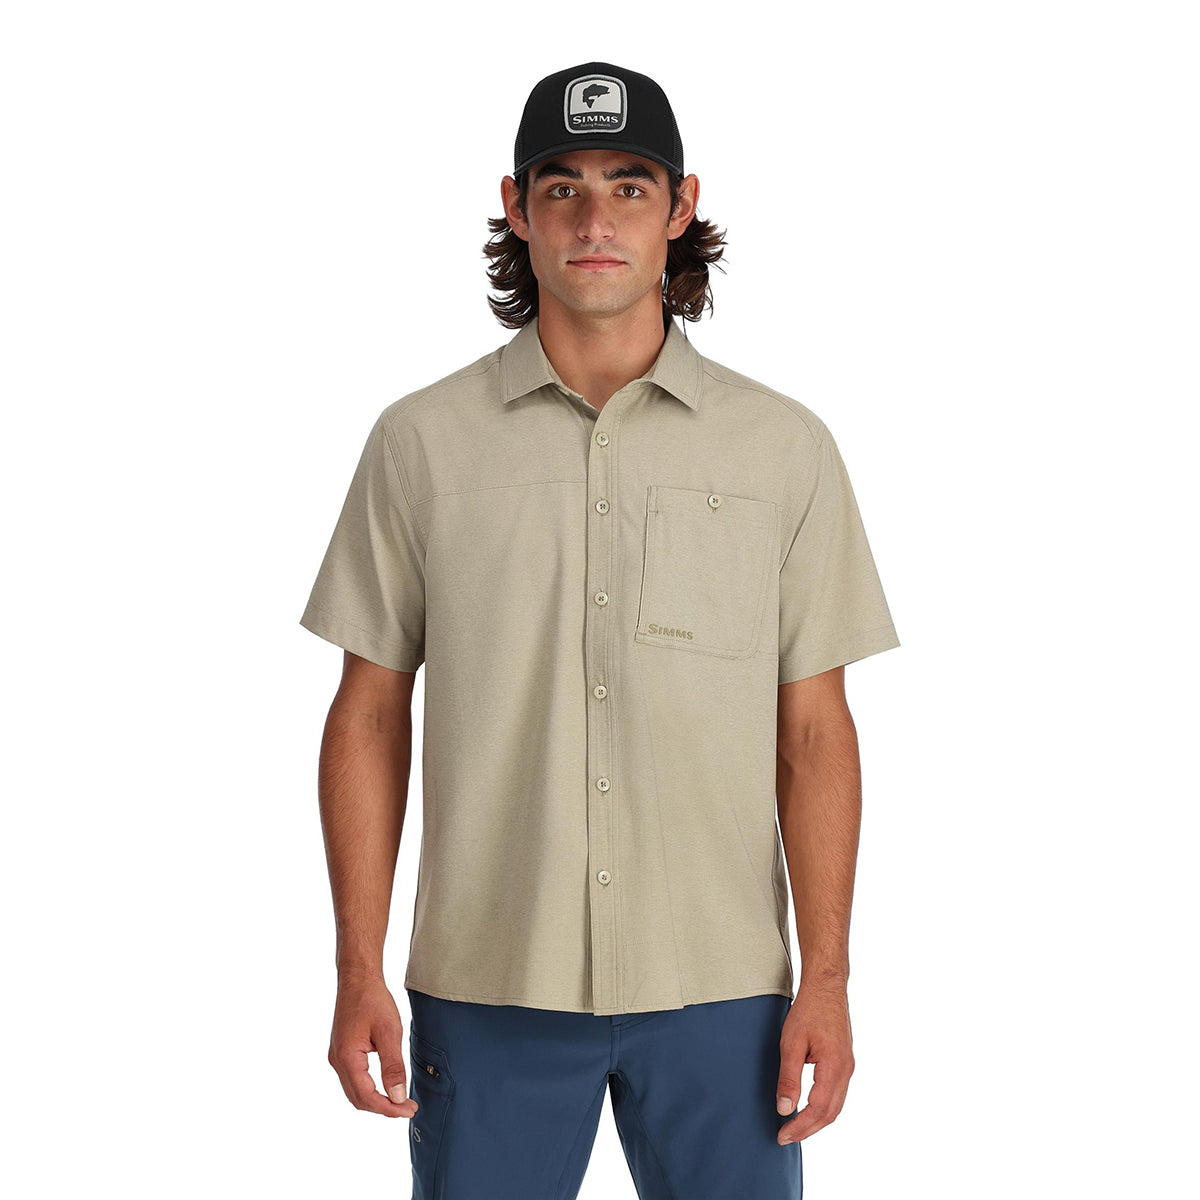 Simms Challenger Short Sleeved Fishing Shirt